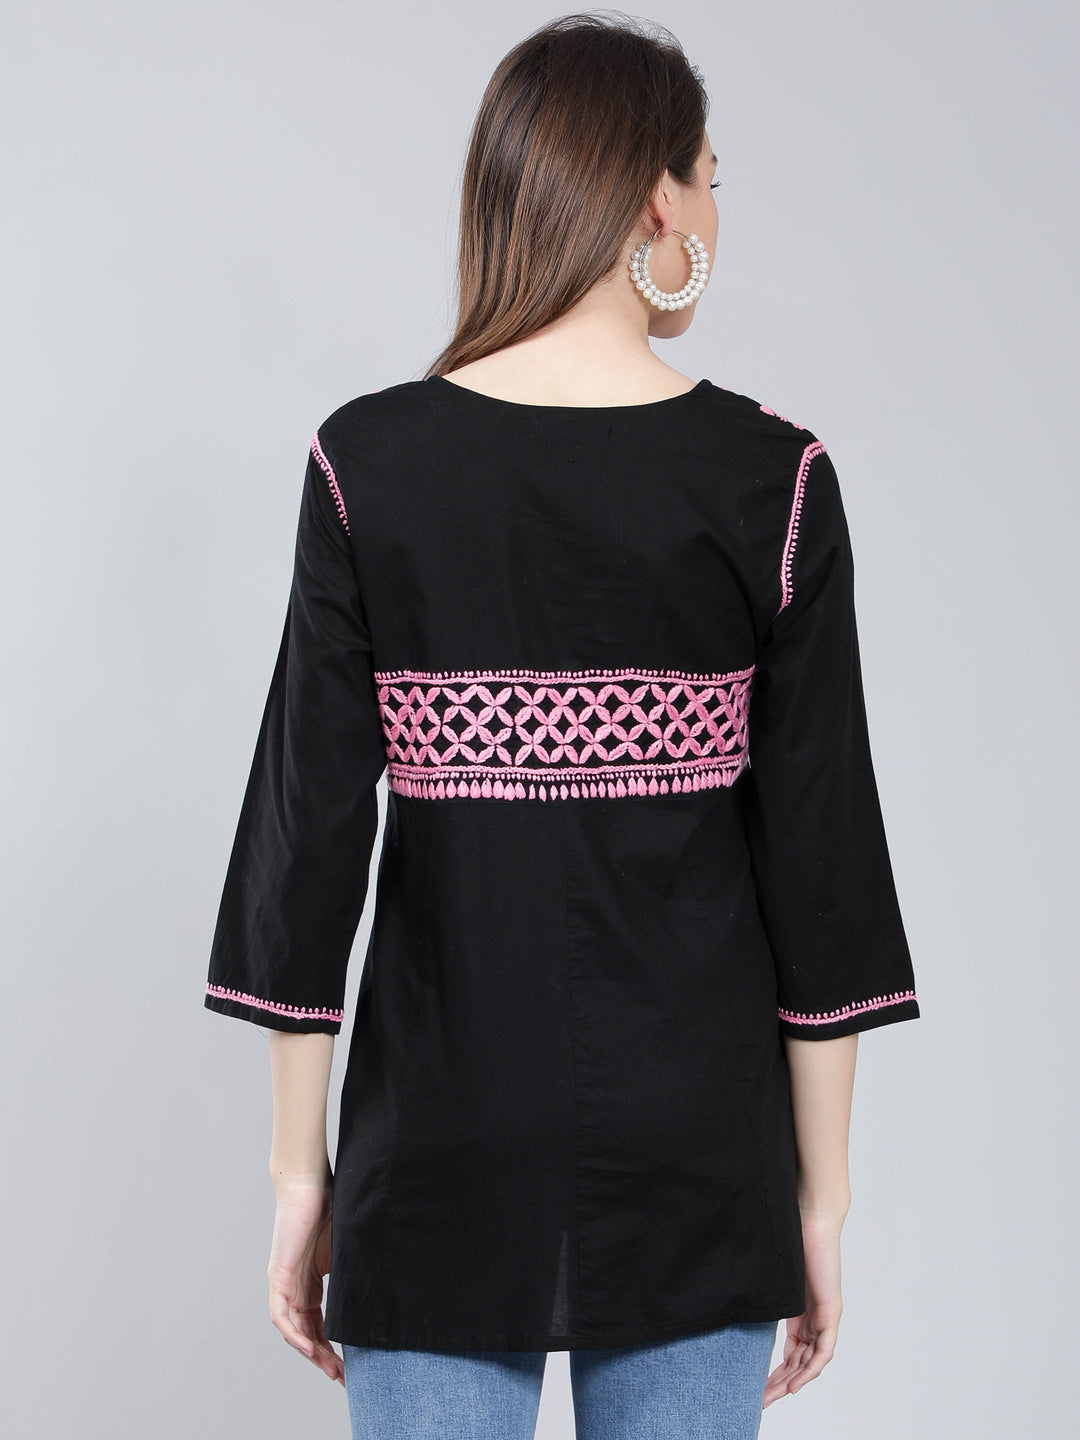 Black & Pink Cotton Chikan Tunic Peplum Top